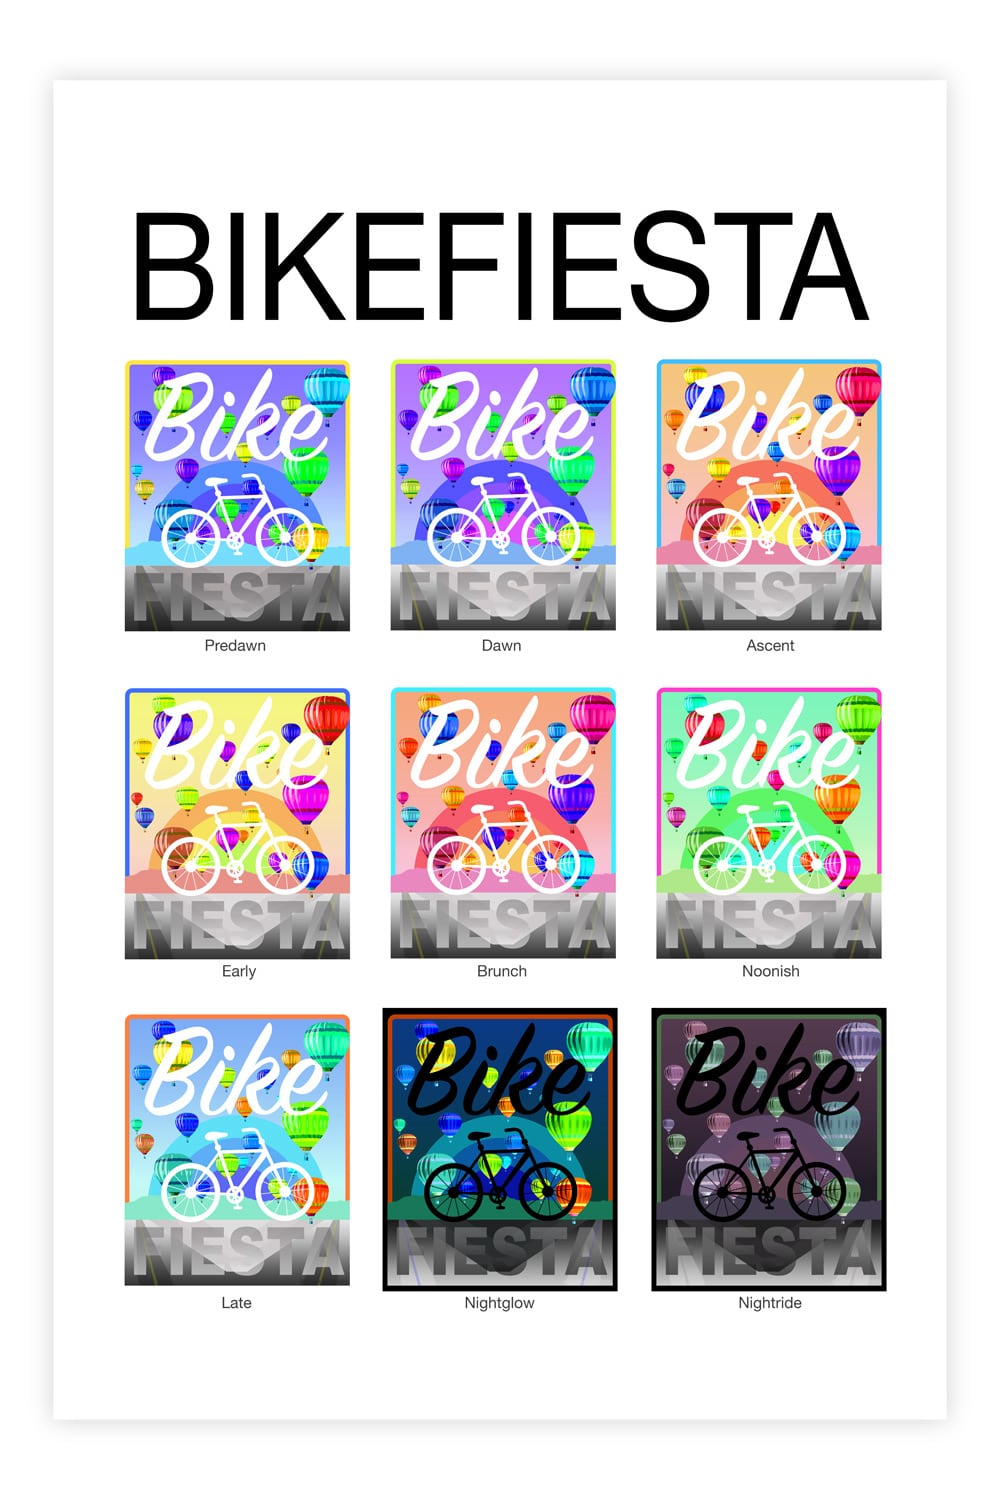 Bike fiesta poster